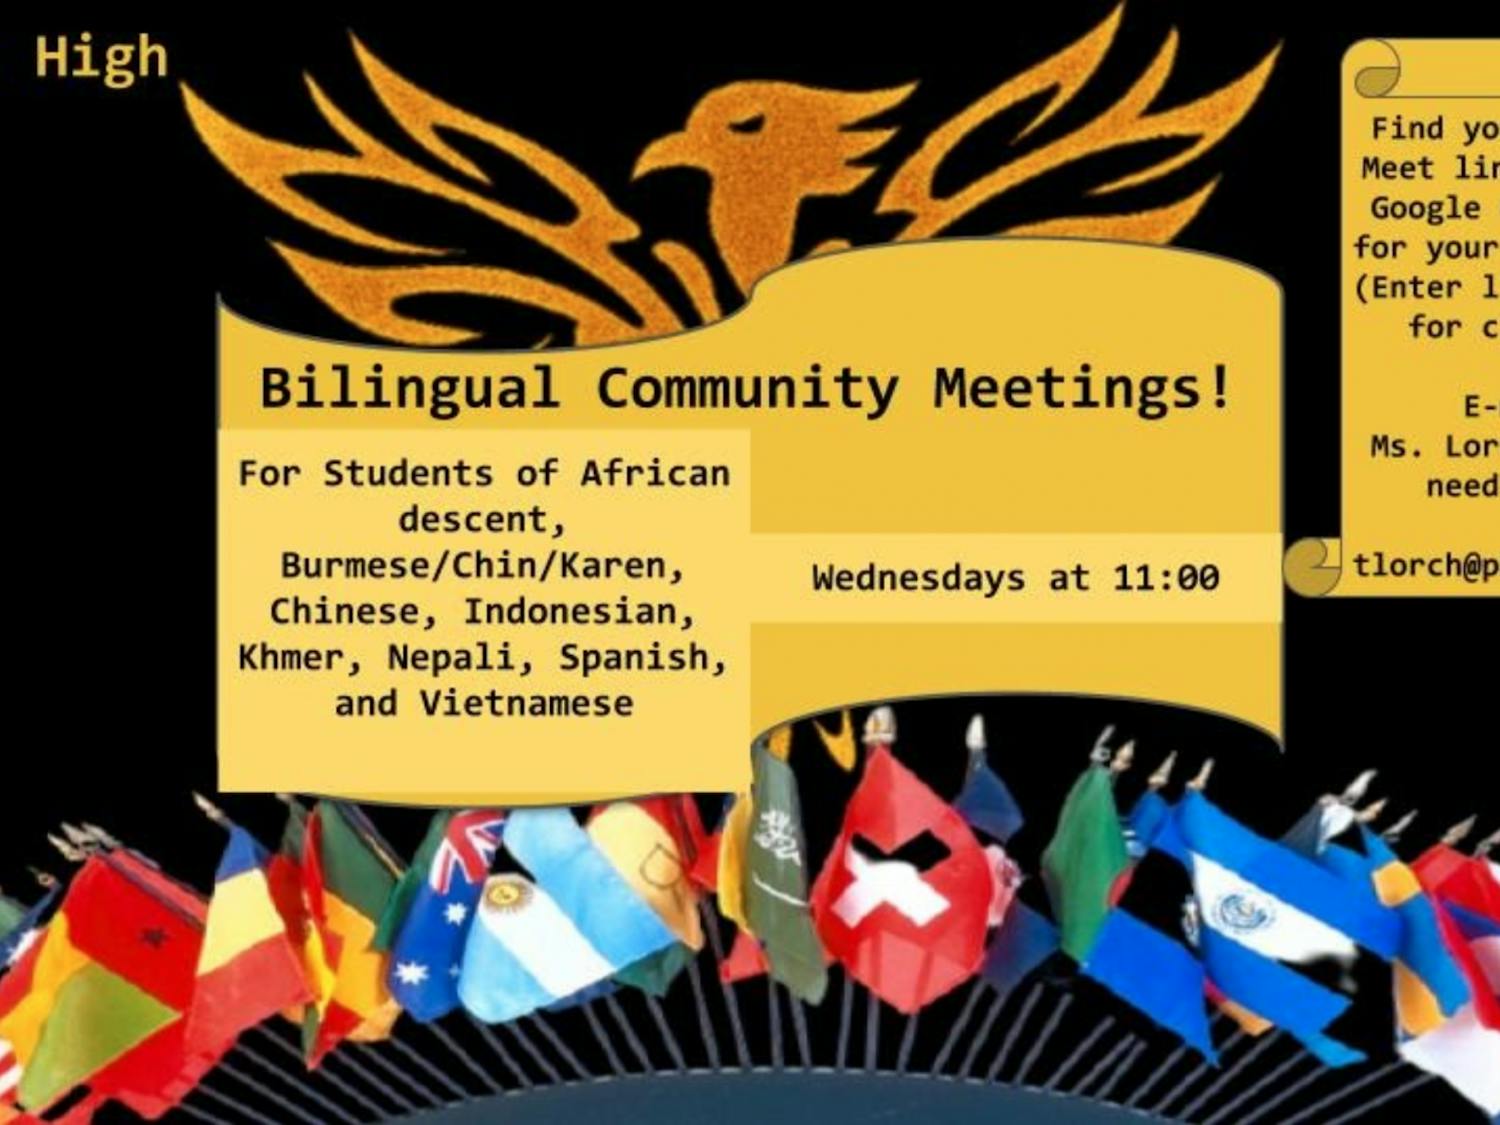 Bilingual Community Meetings flyer. Photo credits: Tiffany Lorch